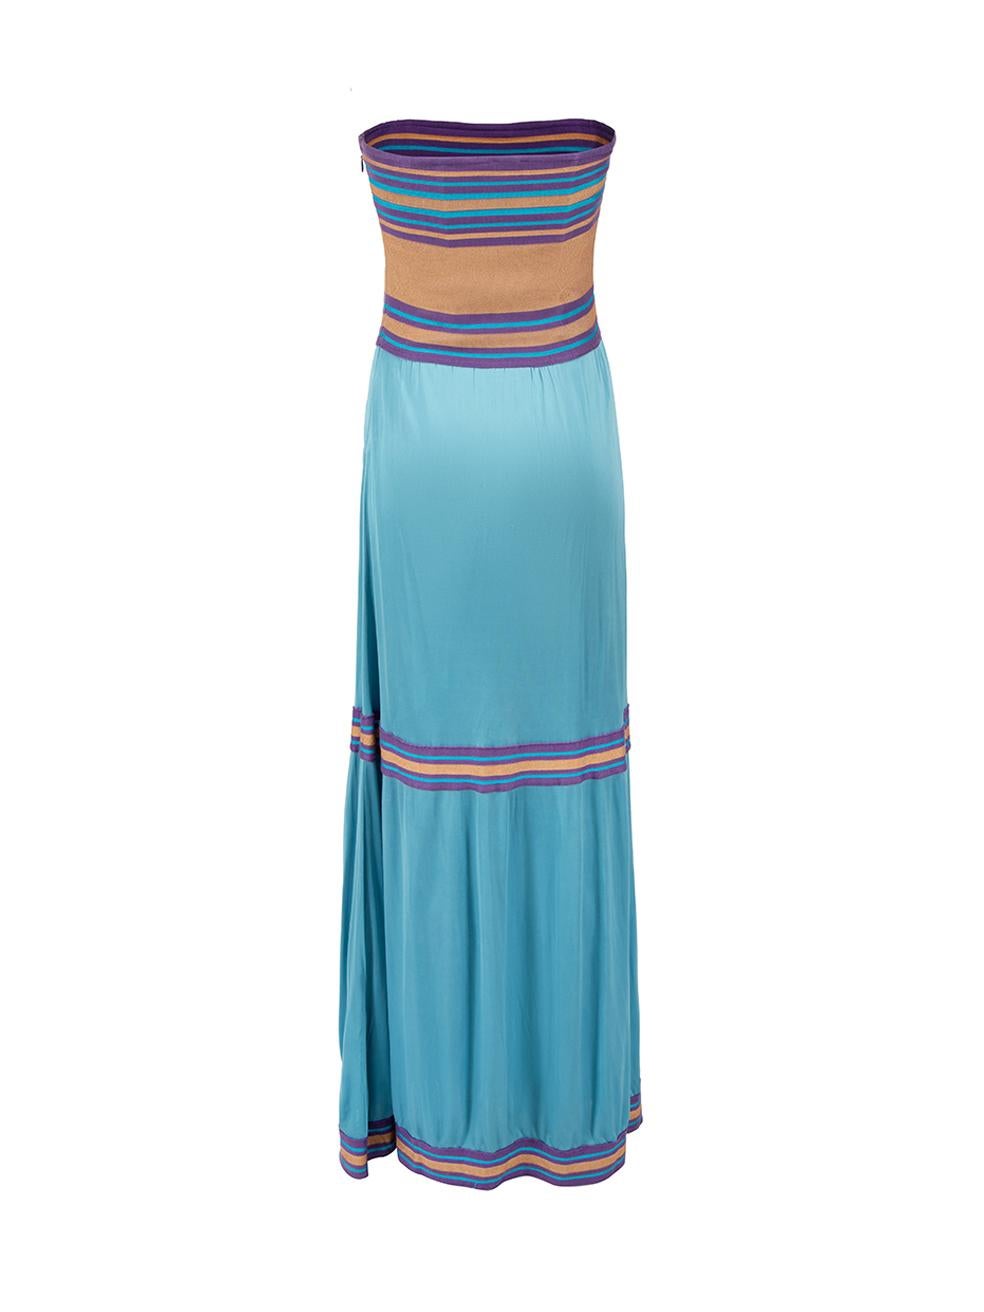 Missoni M Missoni Blue Striped Tube Maxi Dress Size S In Good Condition For Sale In London, GB